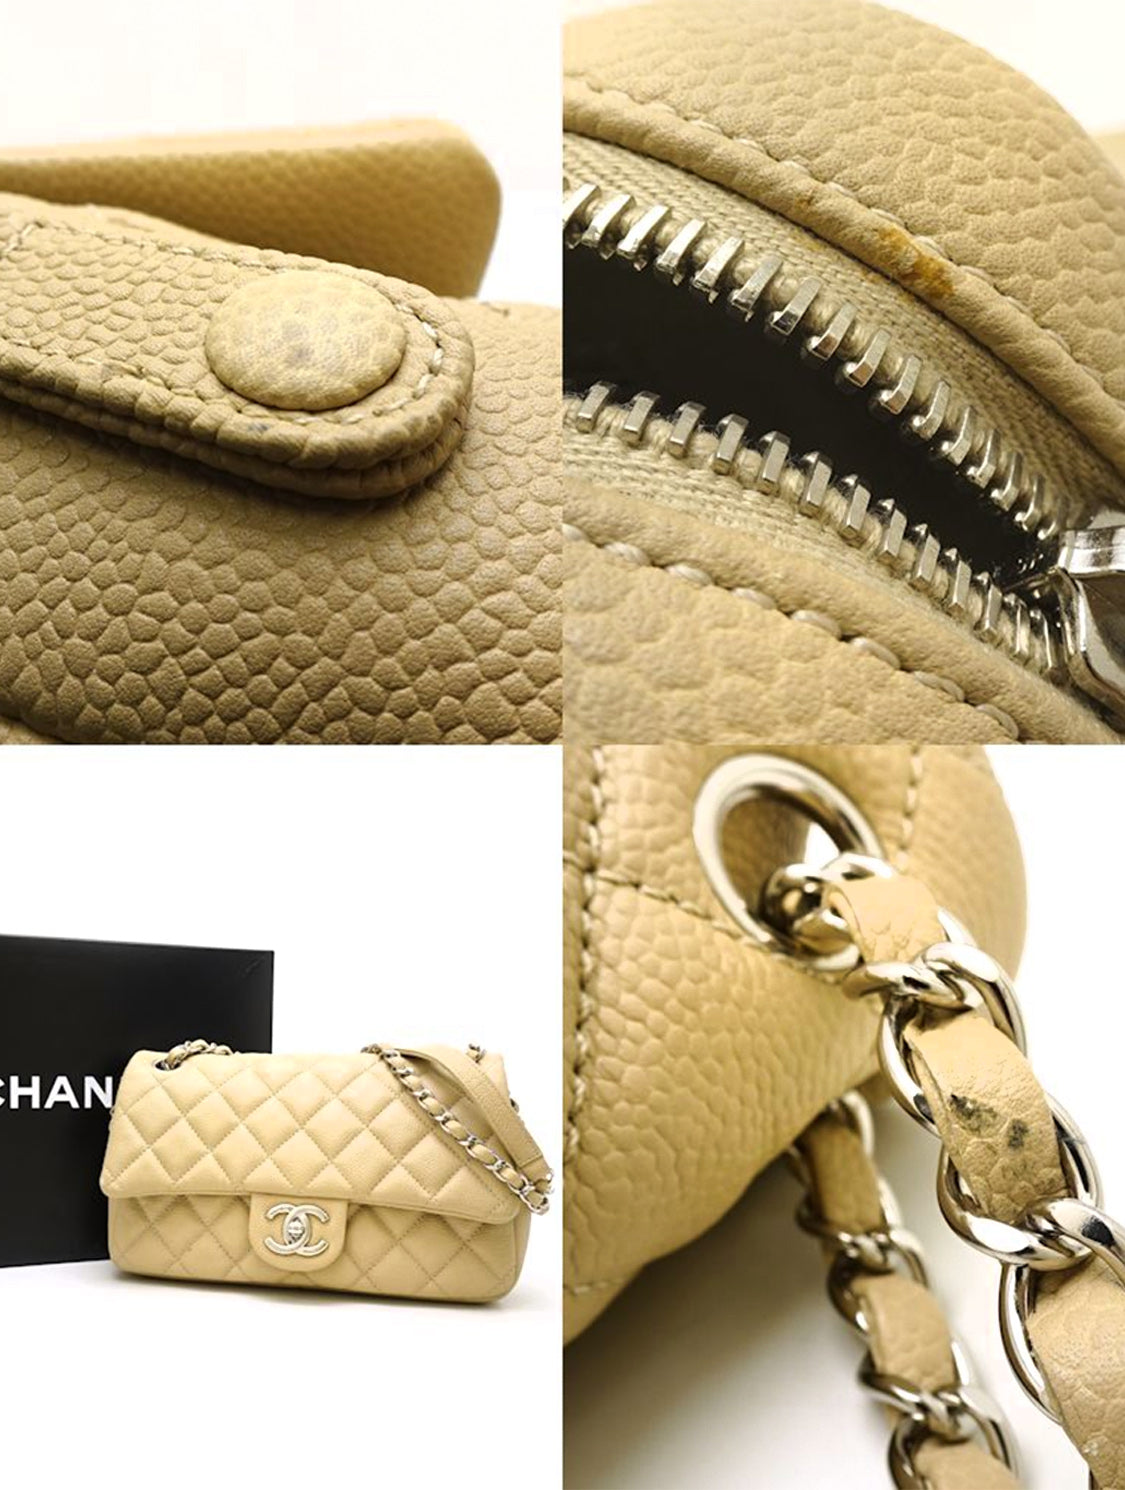 Chanel 2013/2014 Beige Matresse Pebble Leather Flap Bag